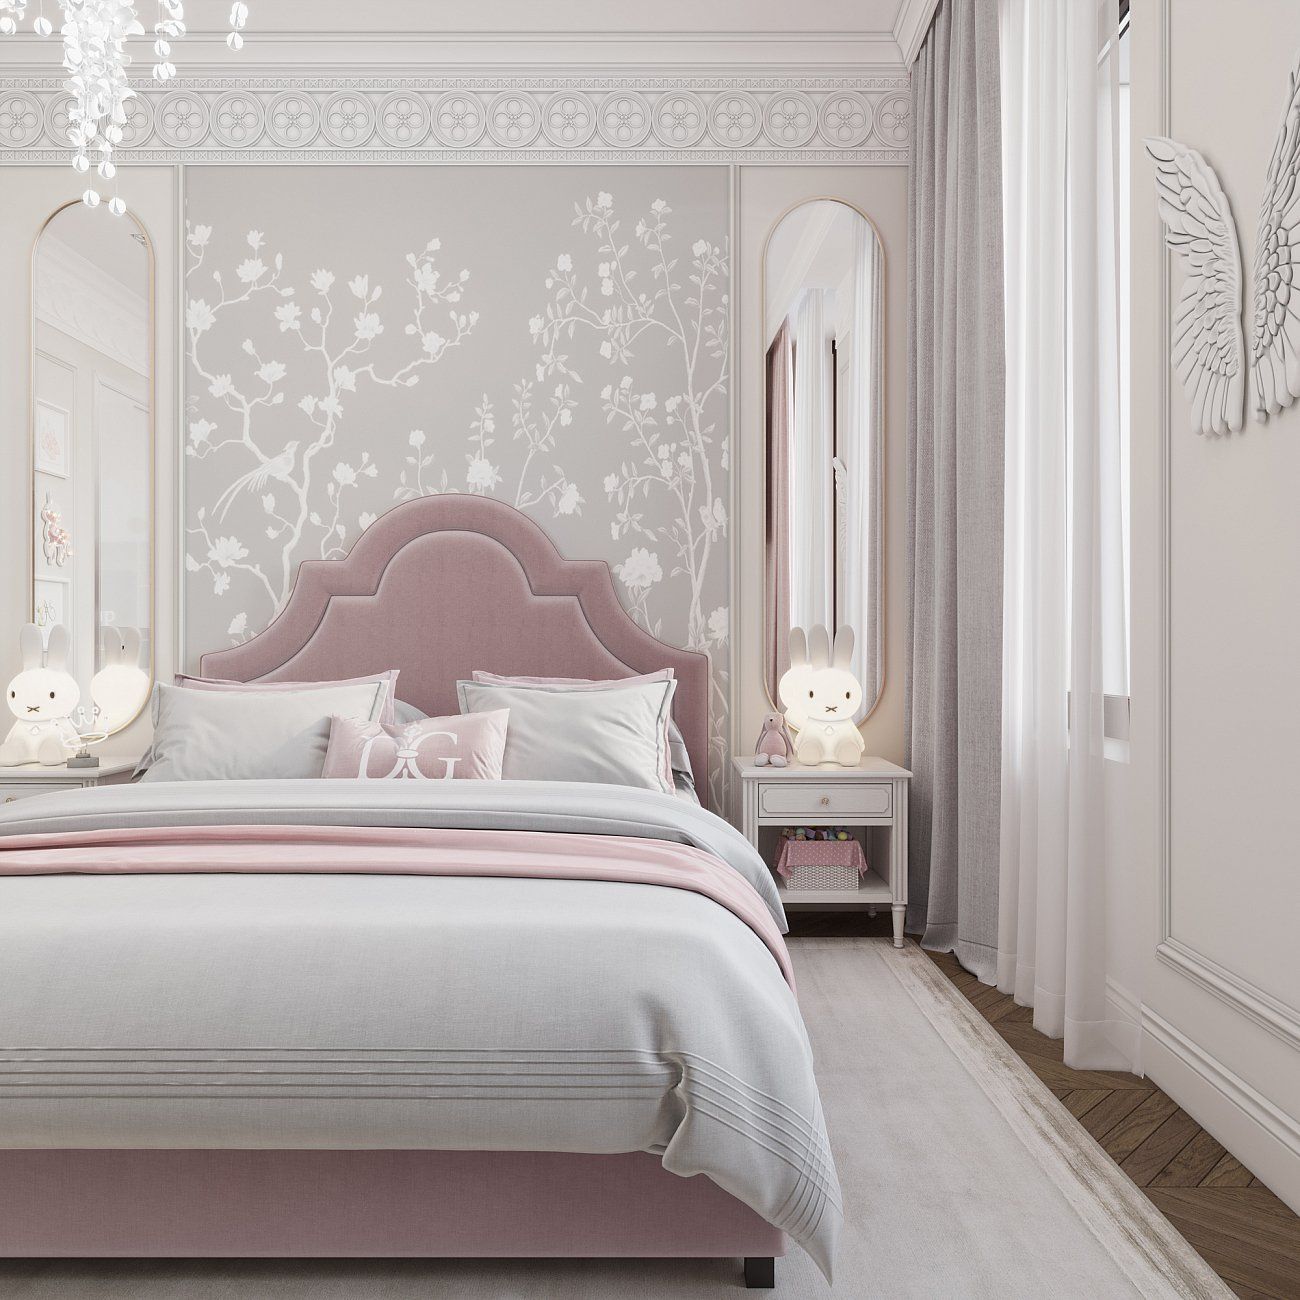 Кровать двуспальная 180х200 см розовая Kennedy